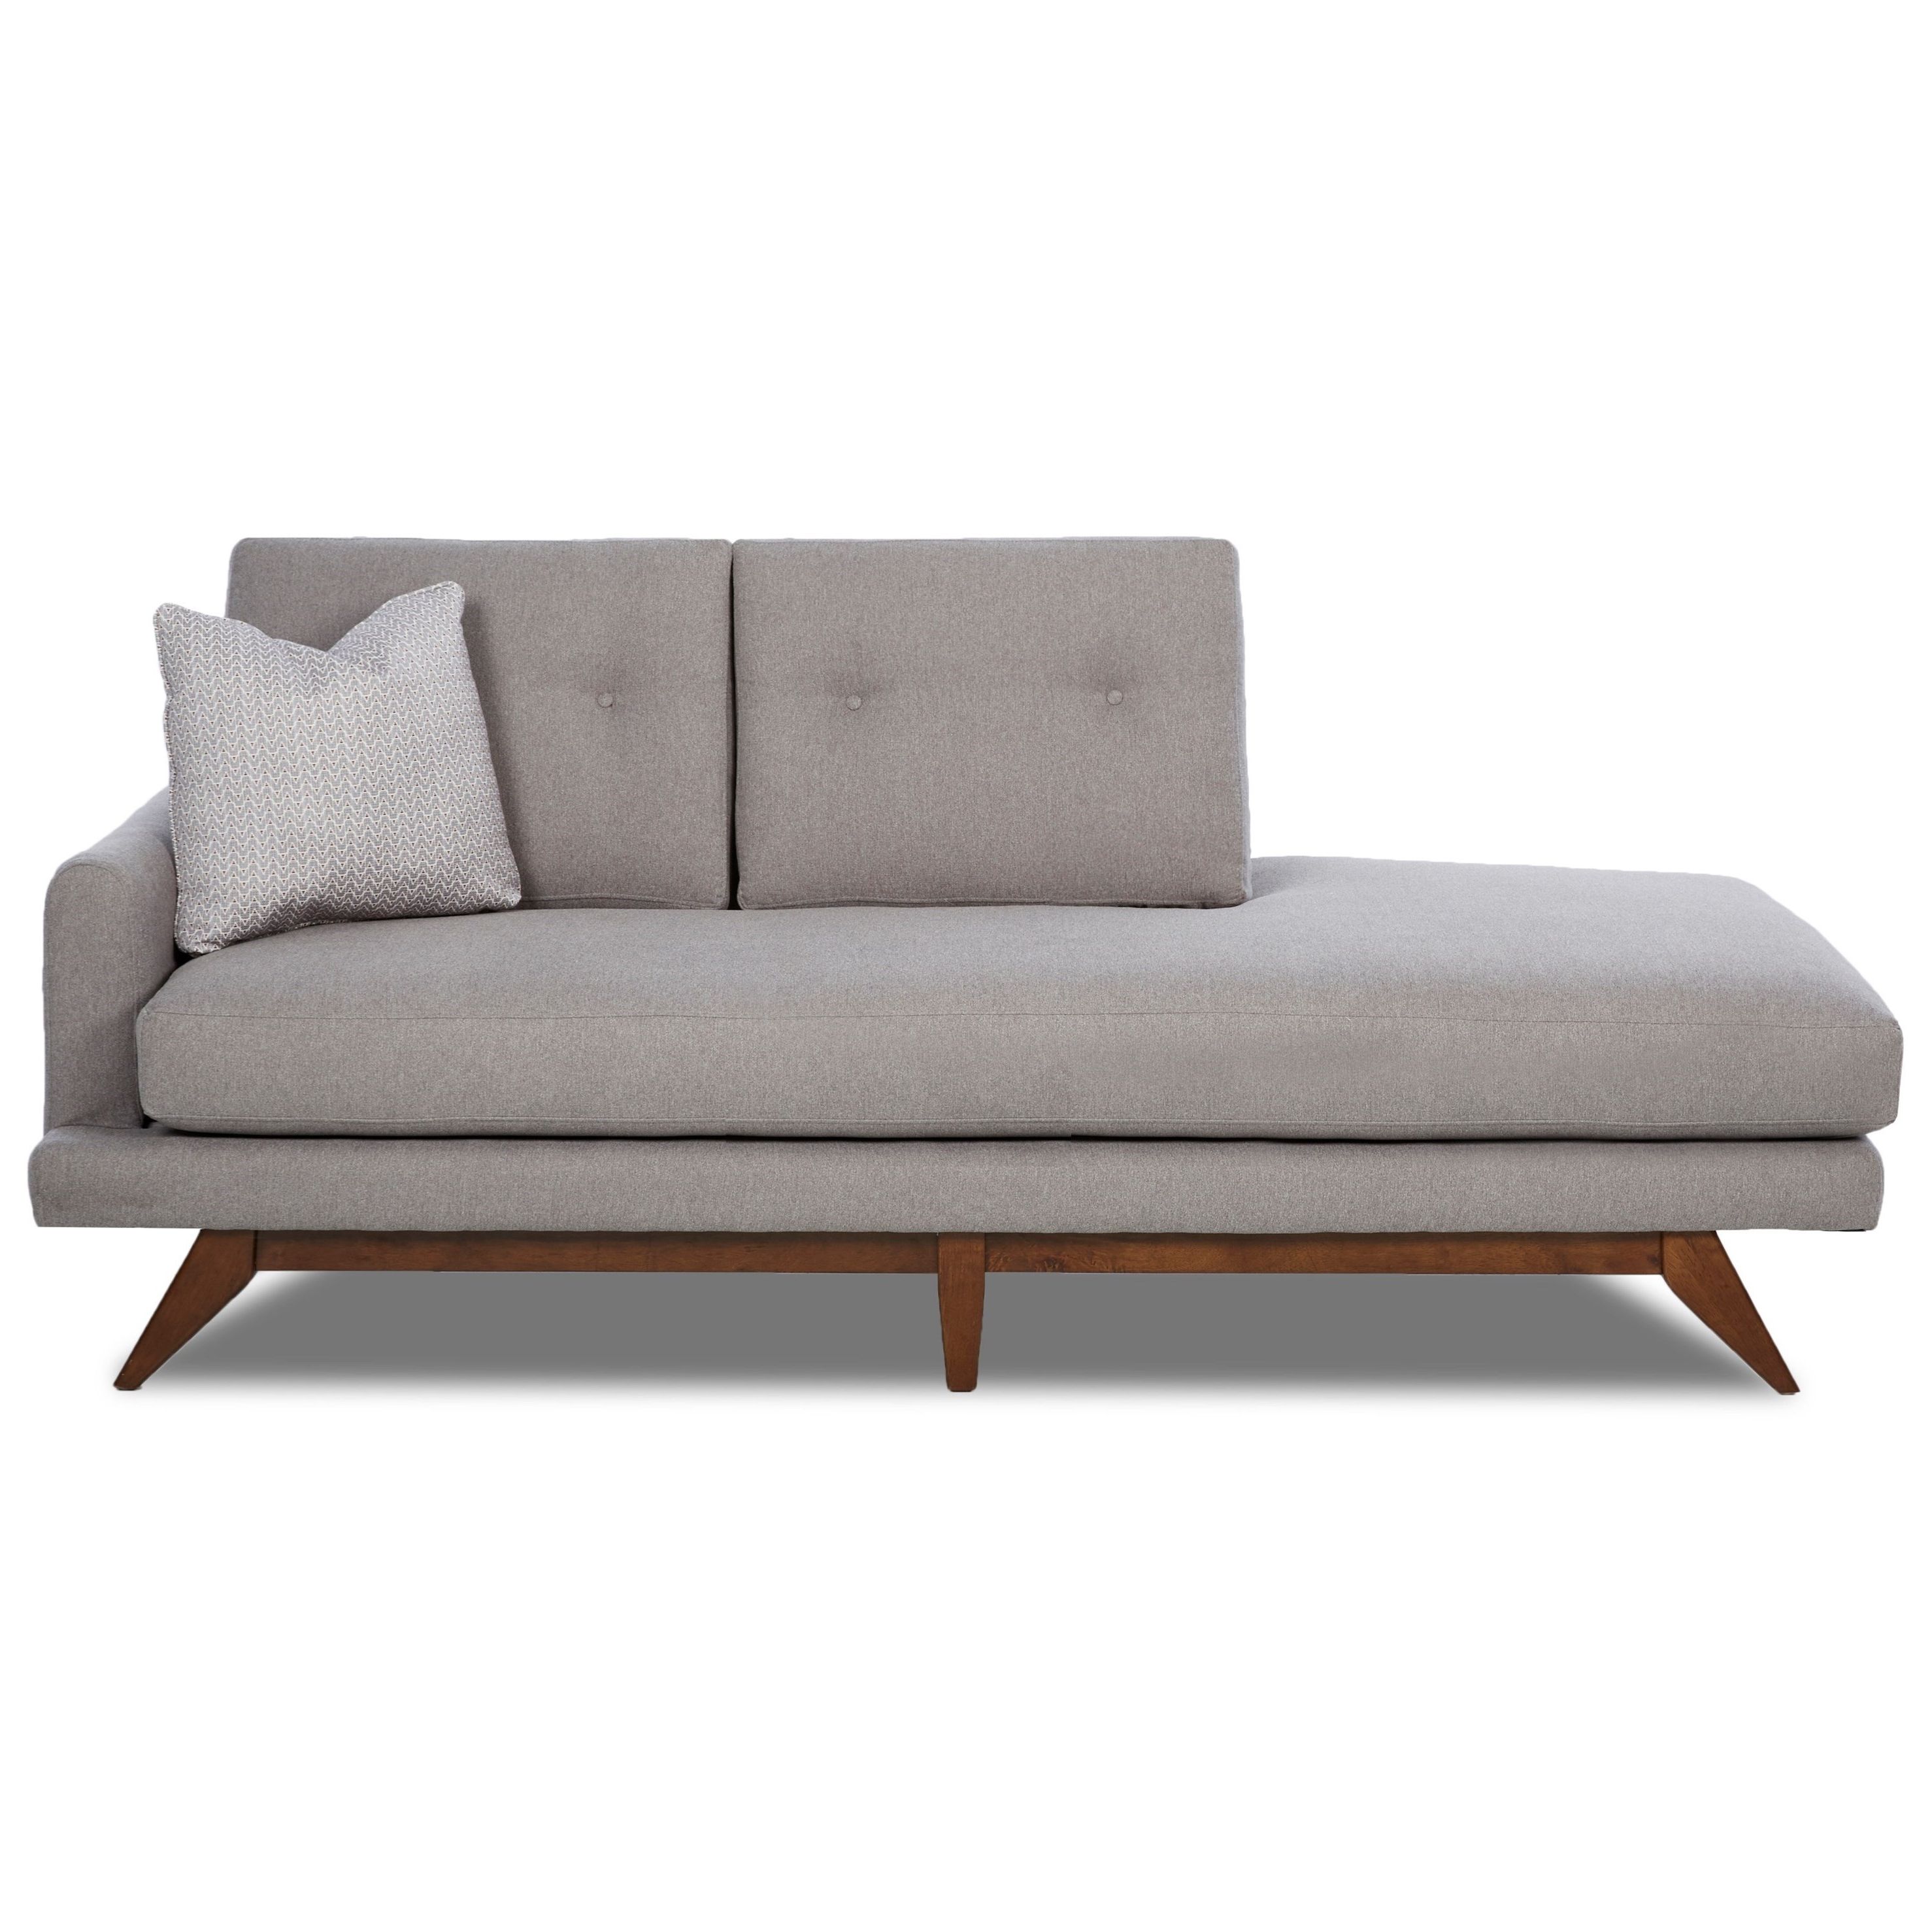 Fashionable Sofa : Mesmerizing Mid Century Modern Chaise Lounges Sofa Mid In Mid Century Modern Chaises (View 7 of 15)